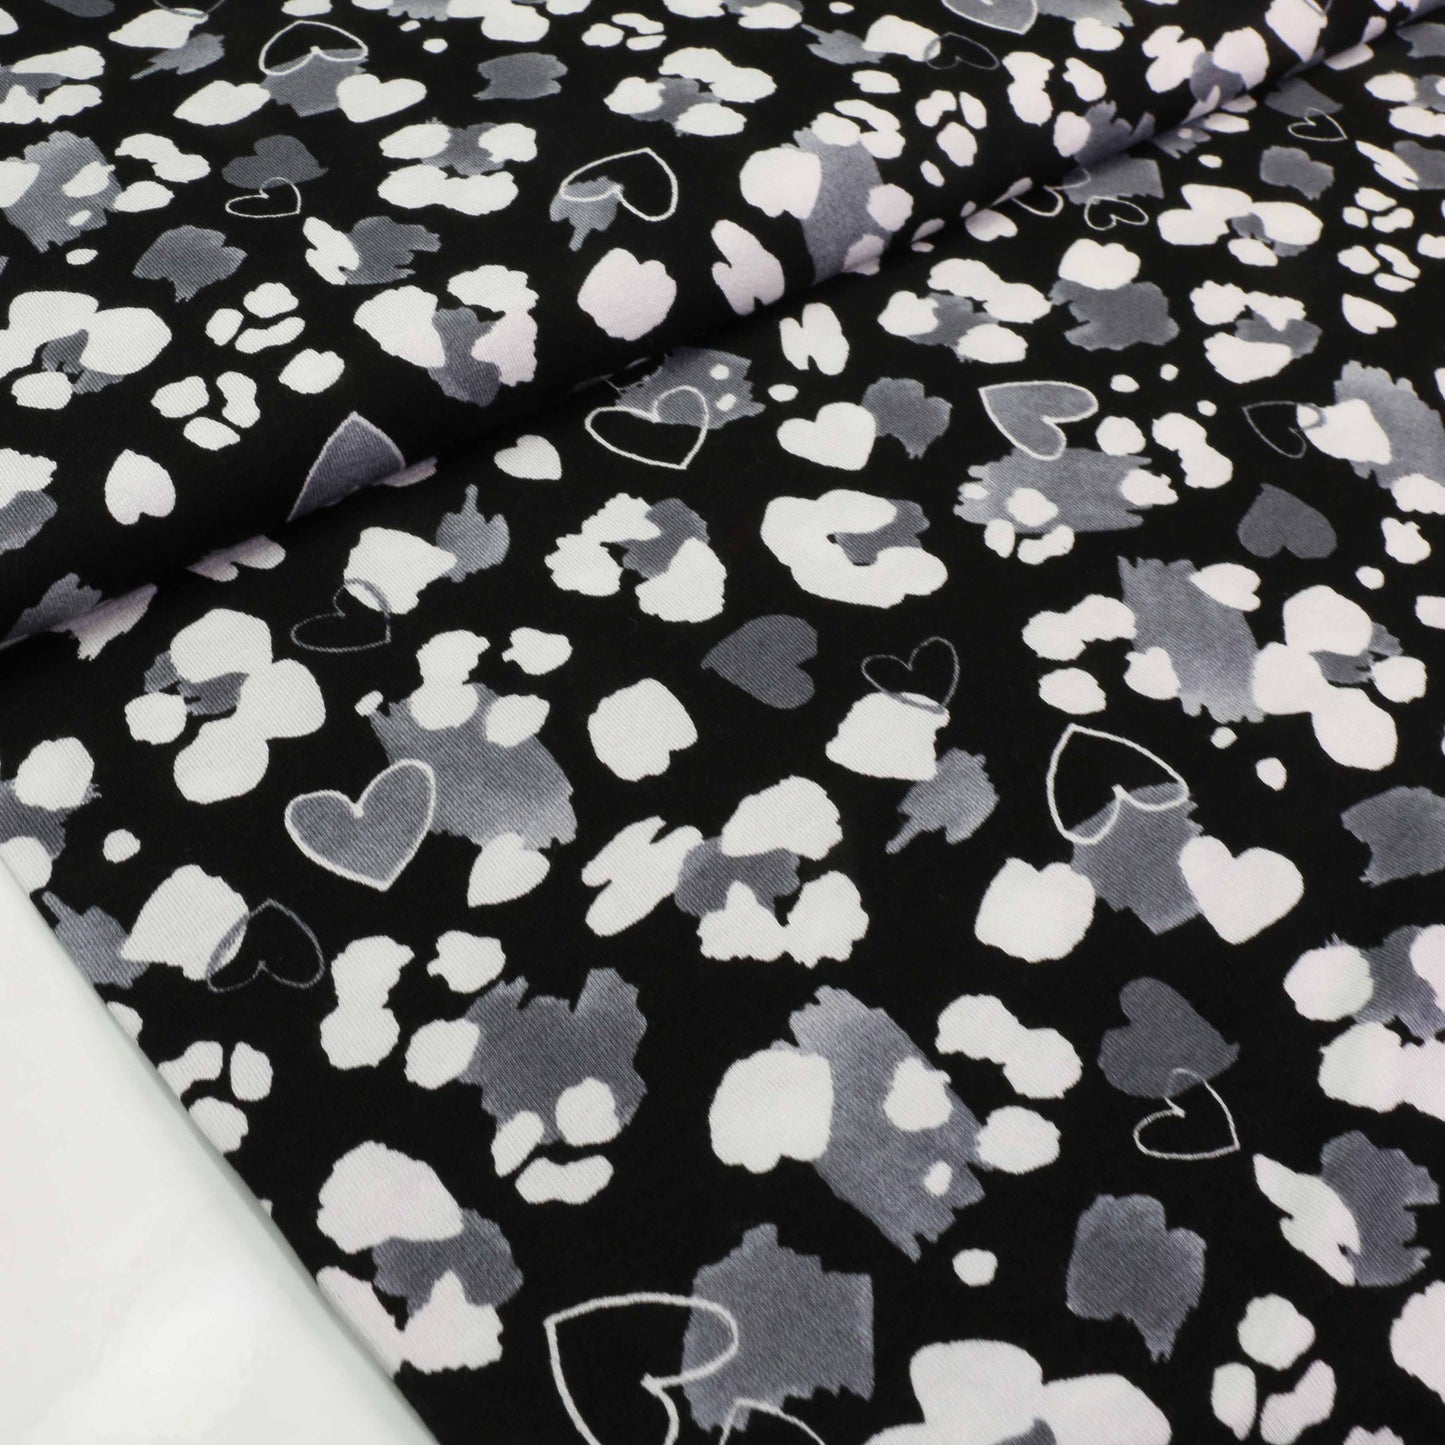 Viscose Jersey Fabric - Black, grey, white